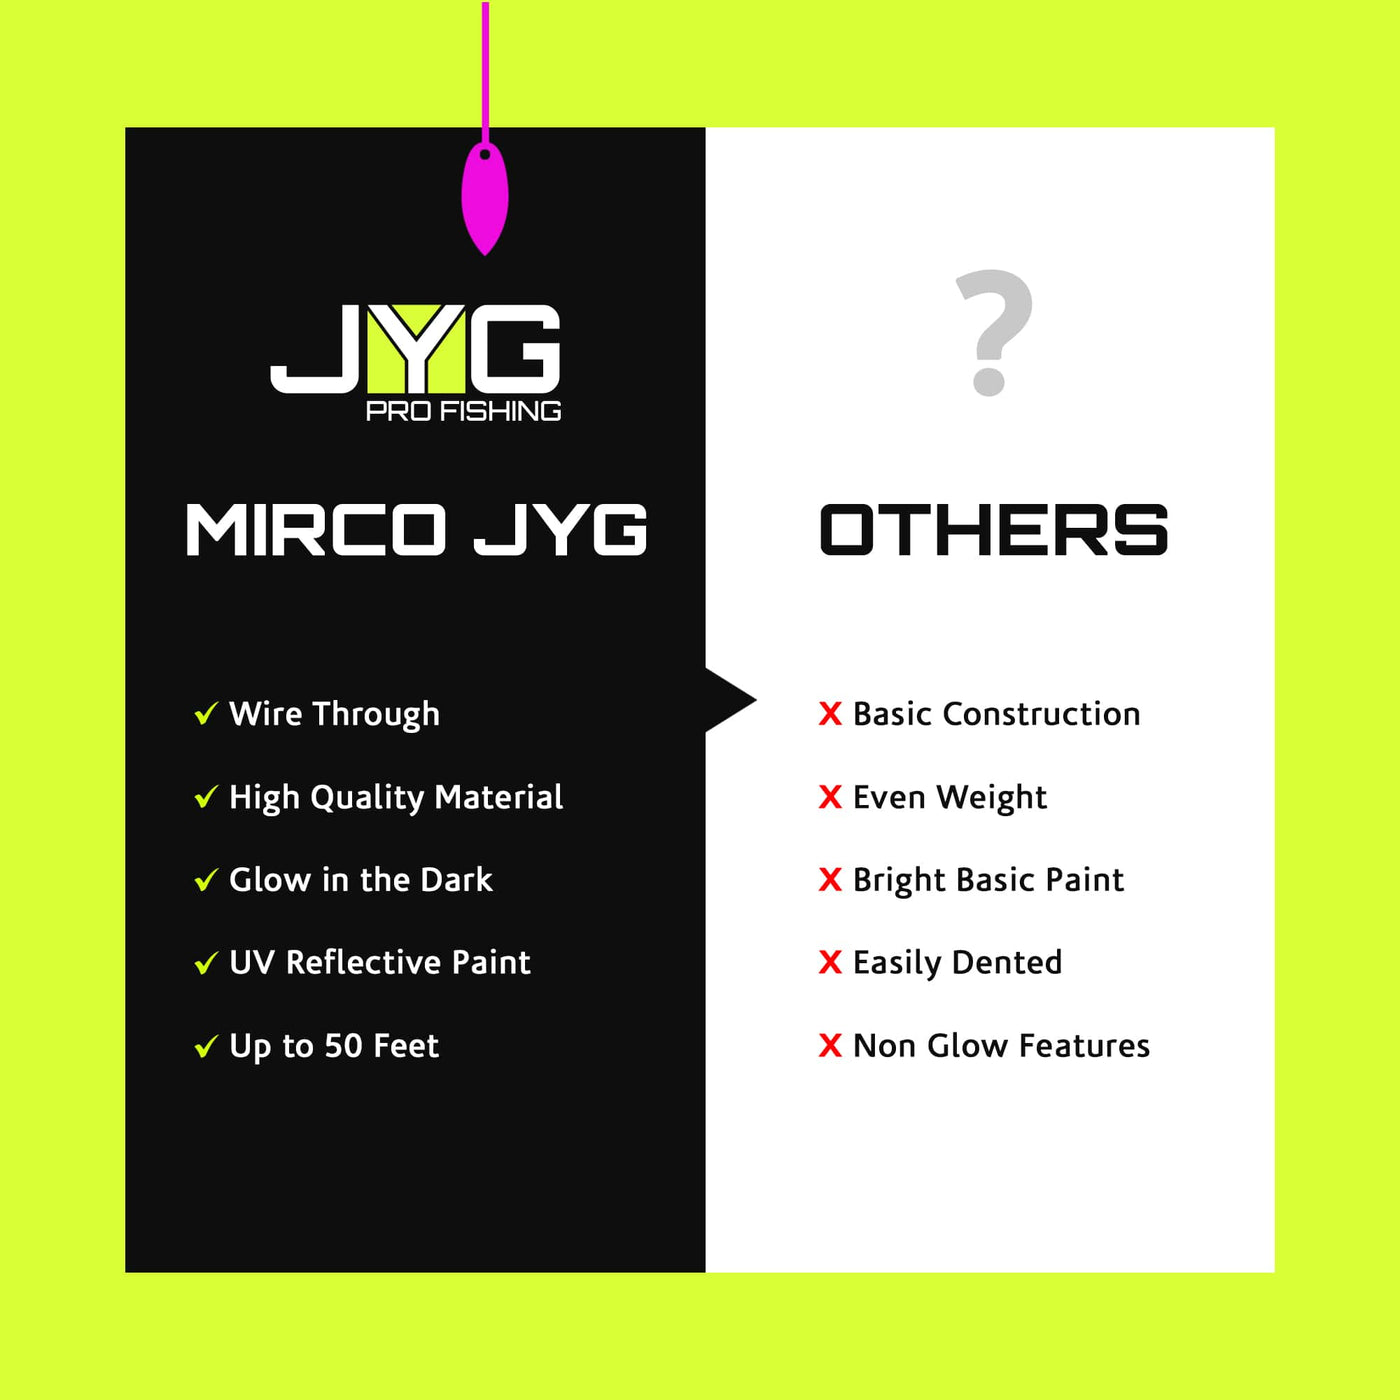 MYCRO JYGS - Pompano Jigs